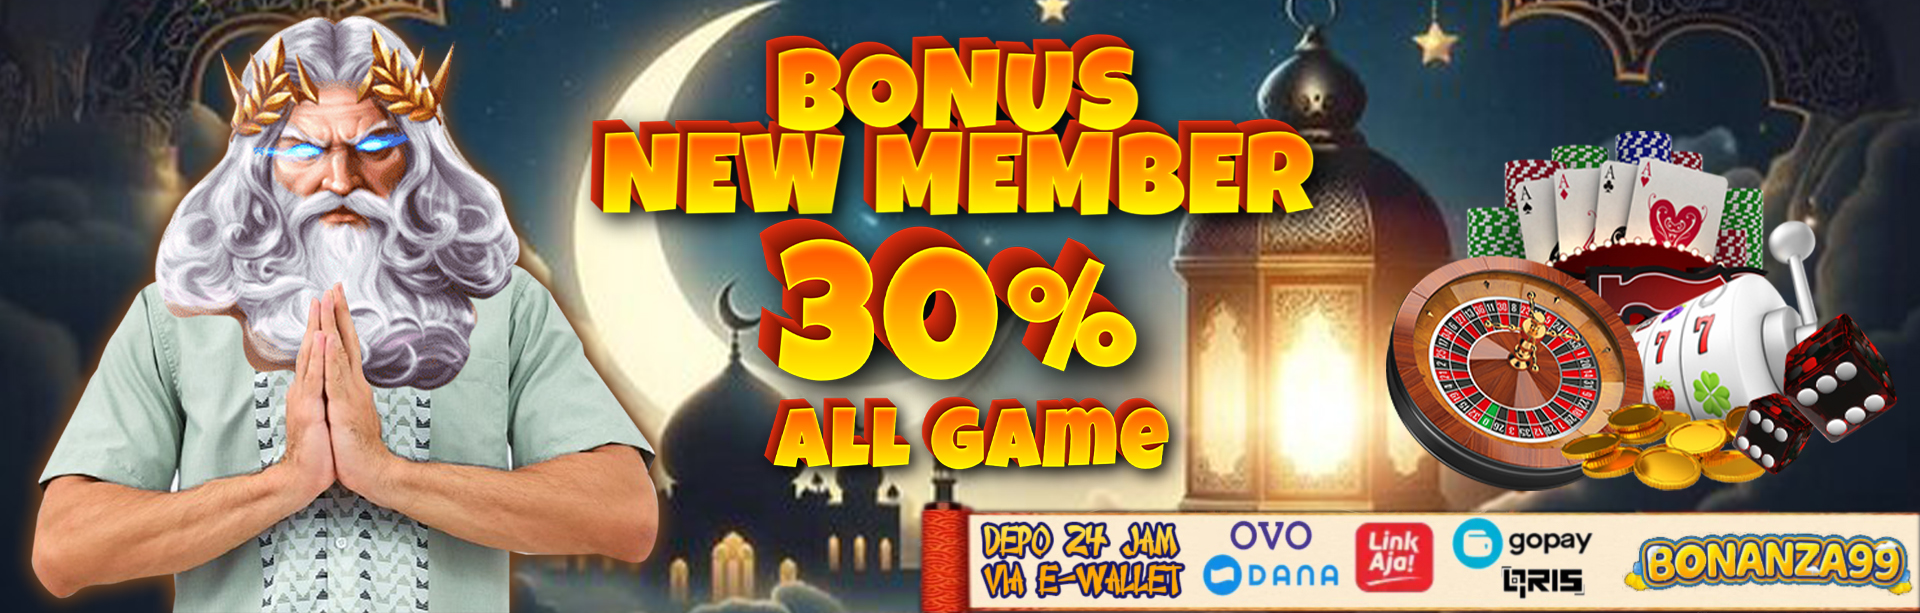 Bonus New Member 30%